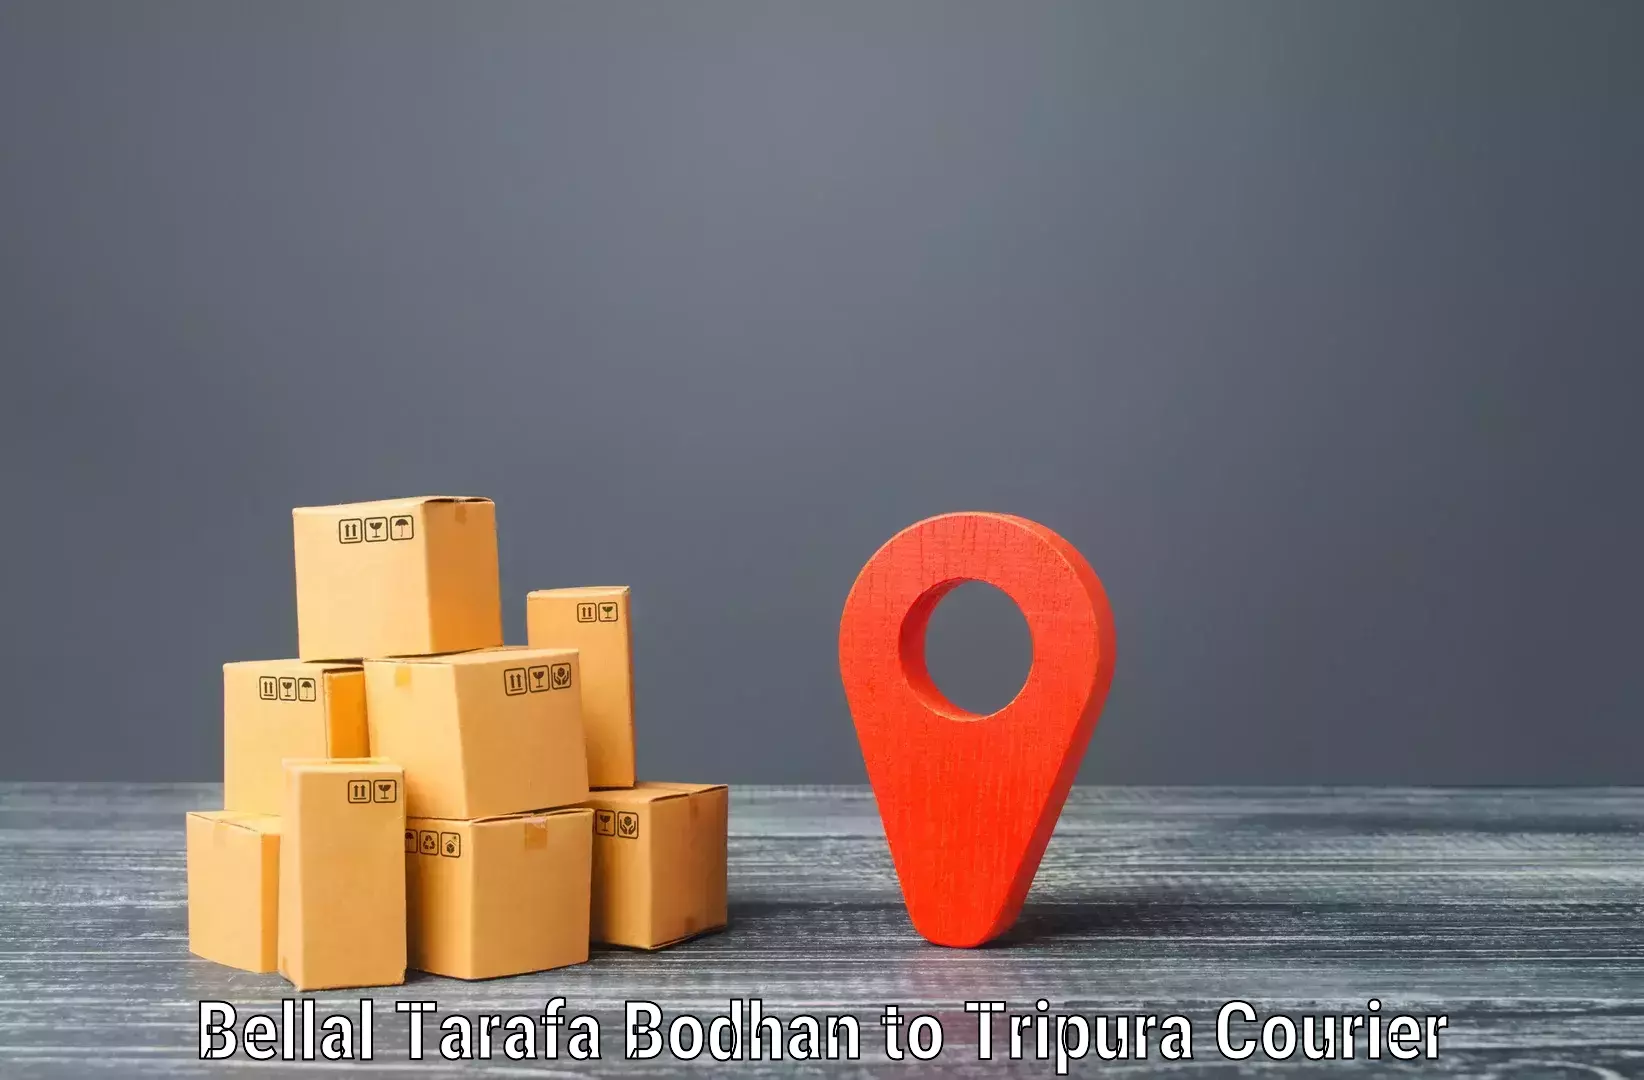 Express delivery capabilities Bellal Tarafa Bodhan to Manughat